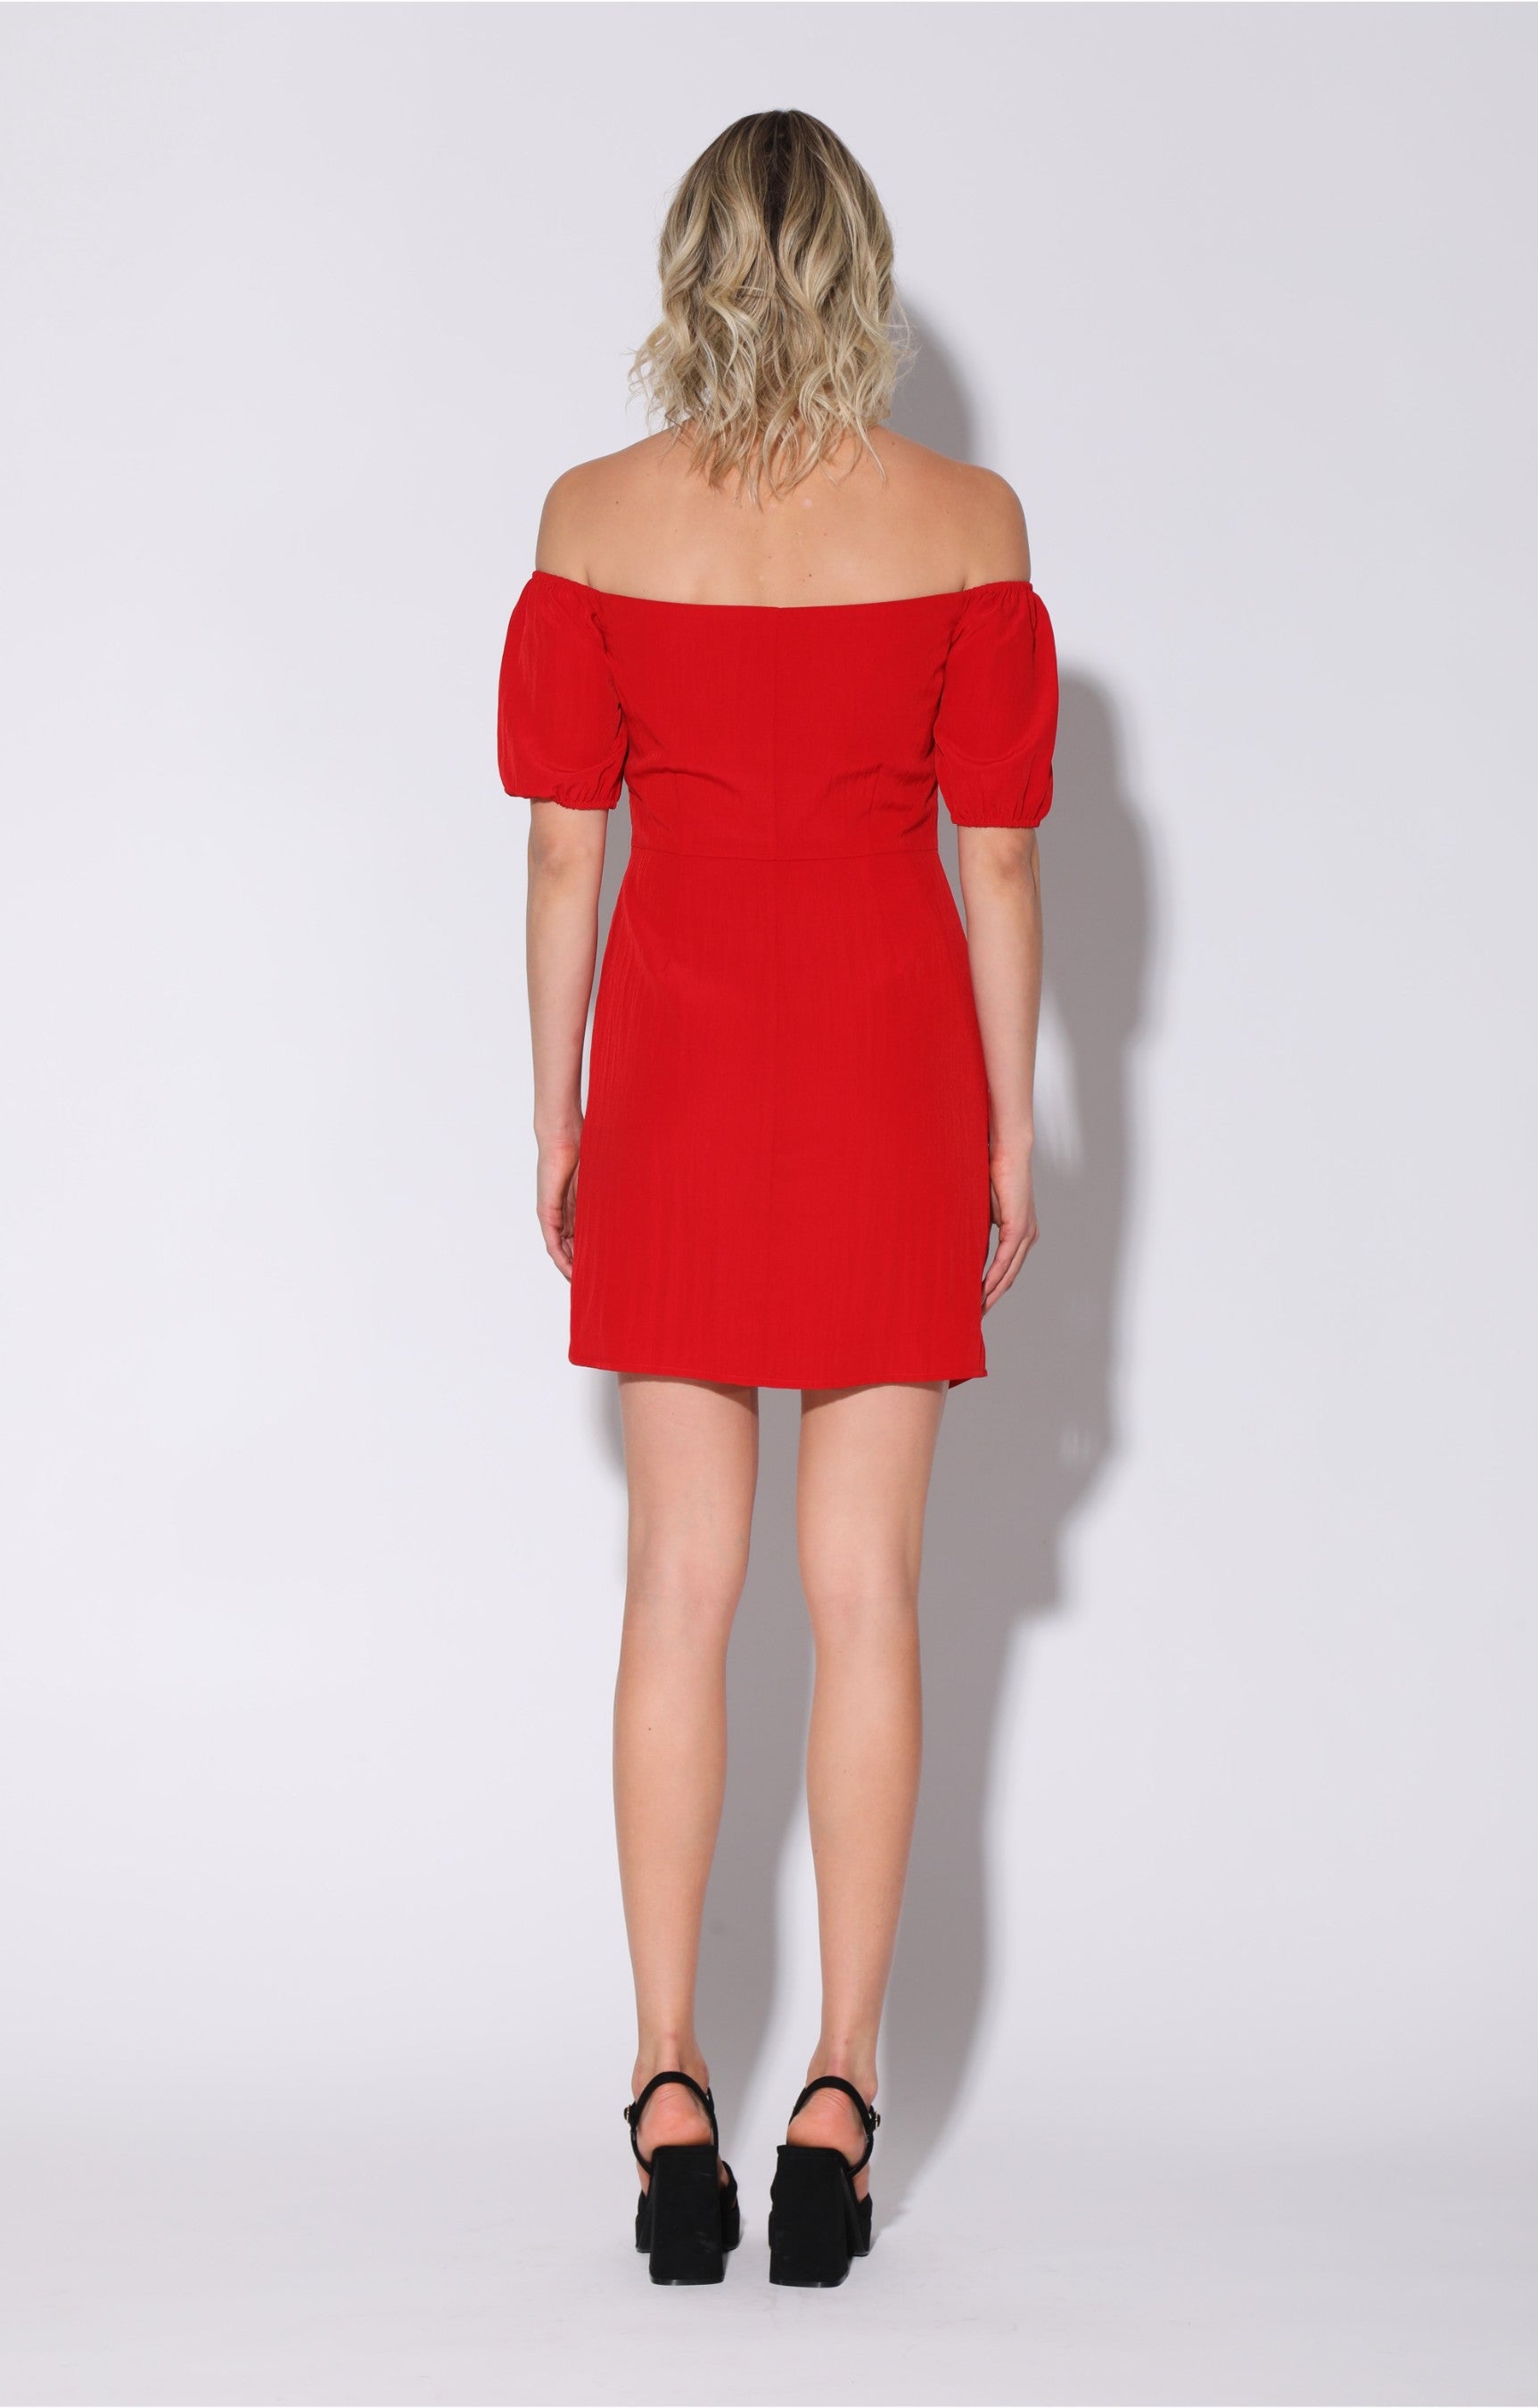 Odette Dress, Red by Walter Baker